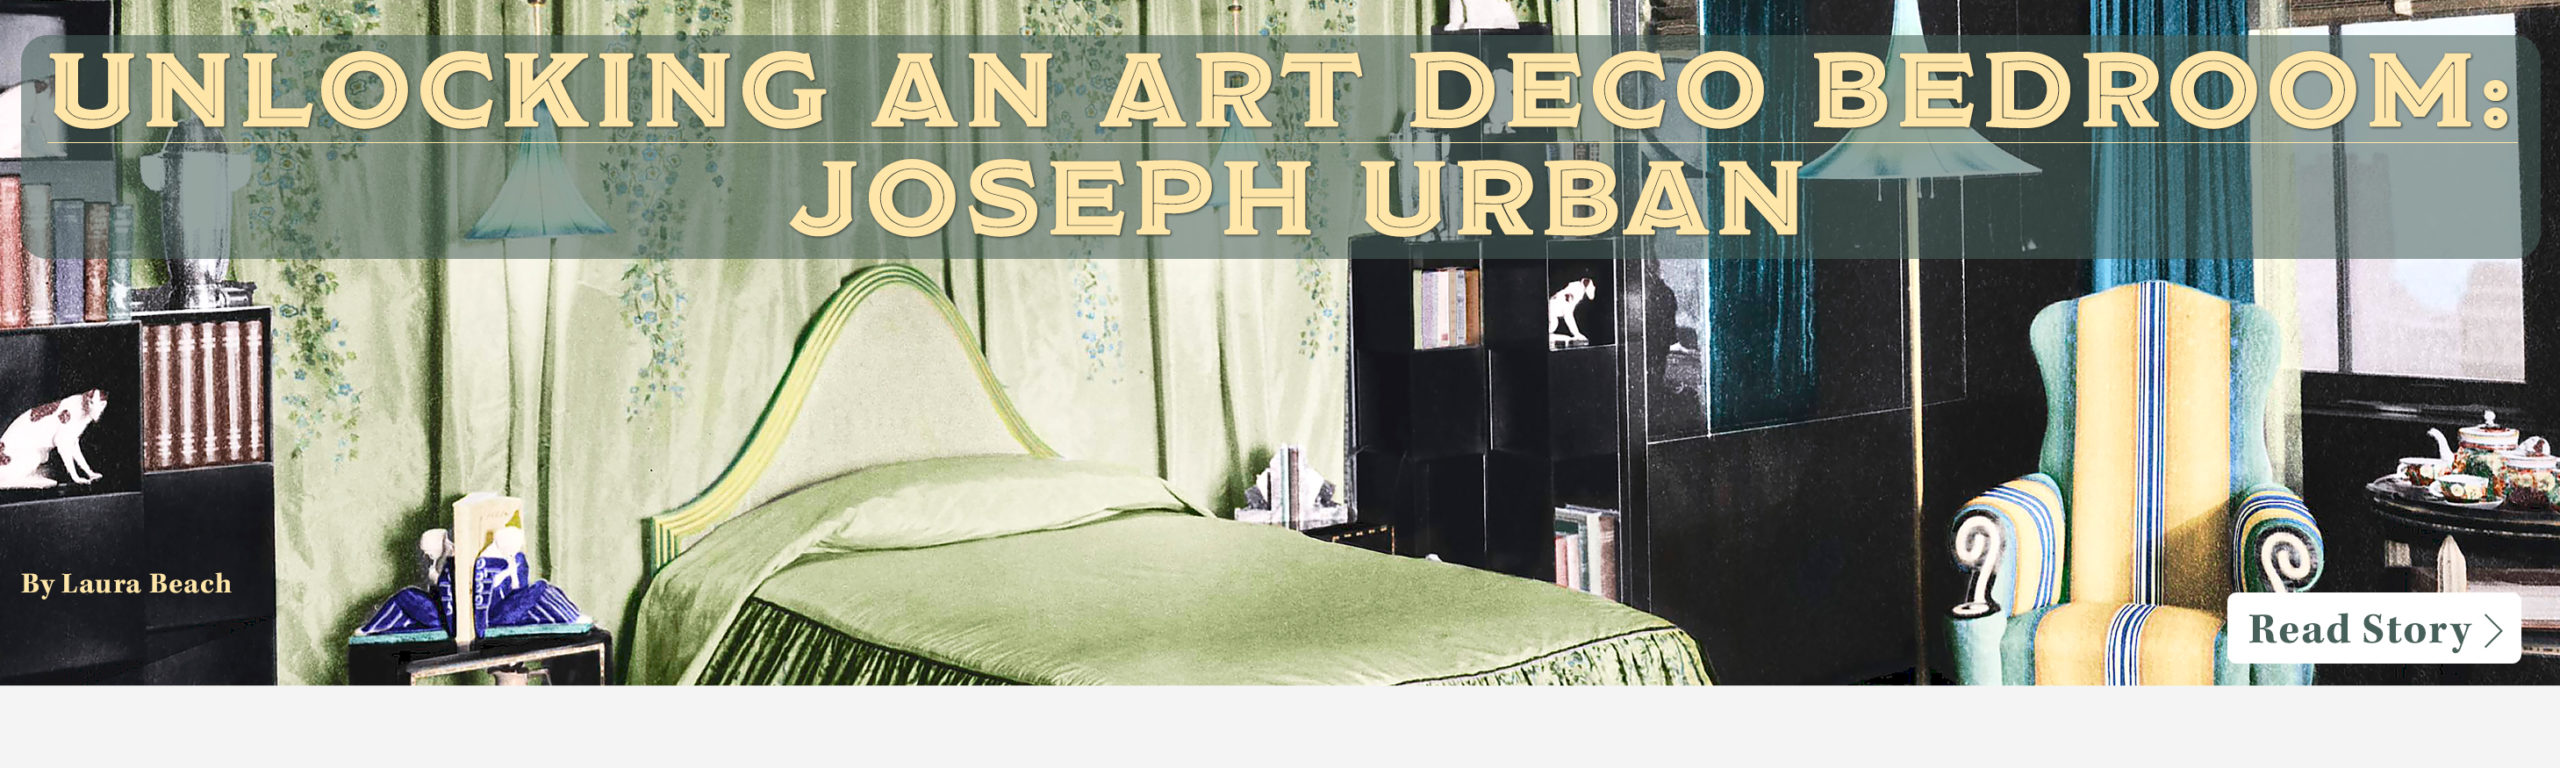 Unlocking An Art Deco Bedroom By Joseph Urban